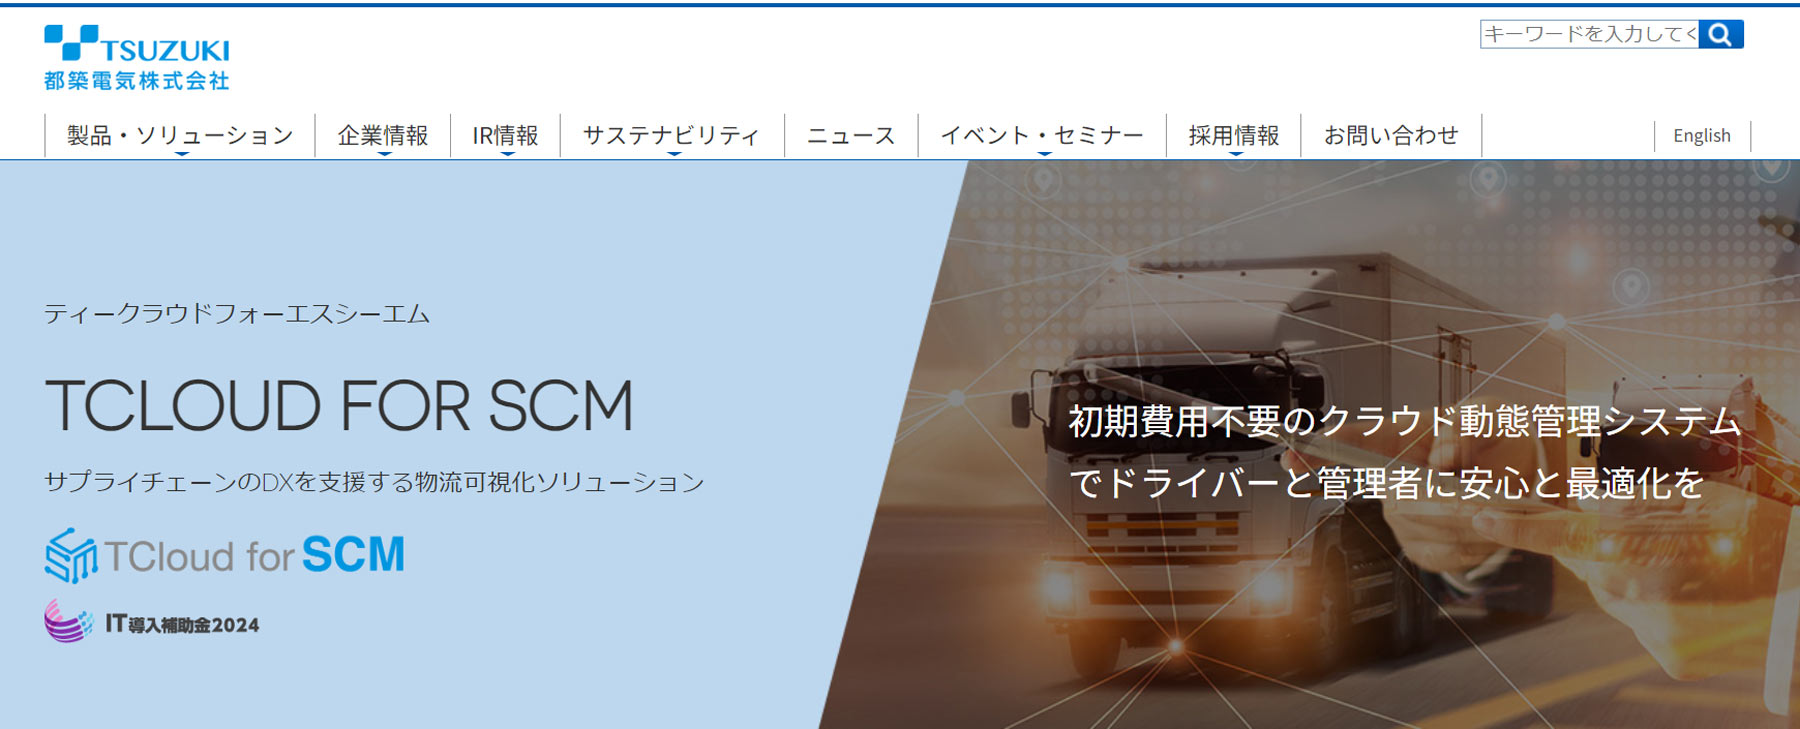 TCloud for SCM公式Webサイト